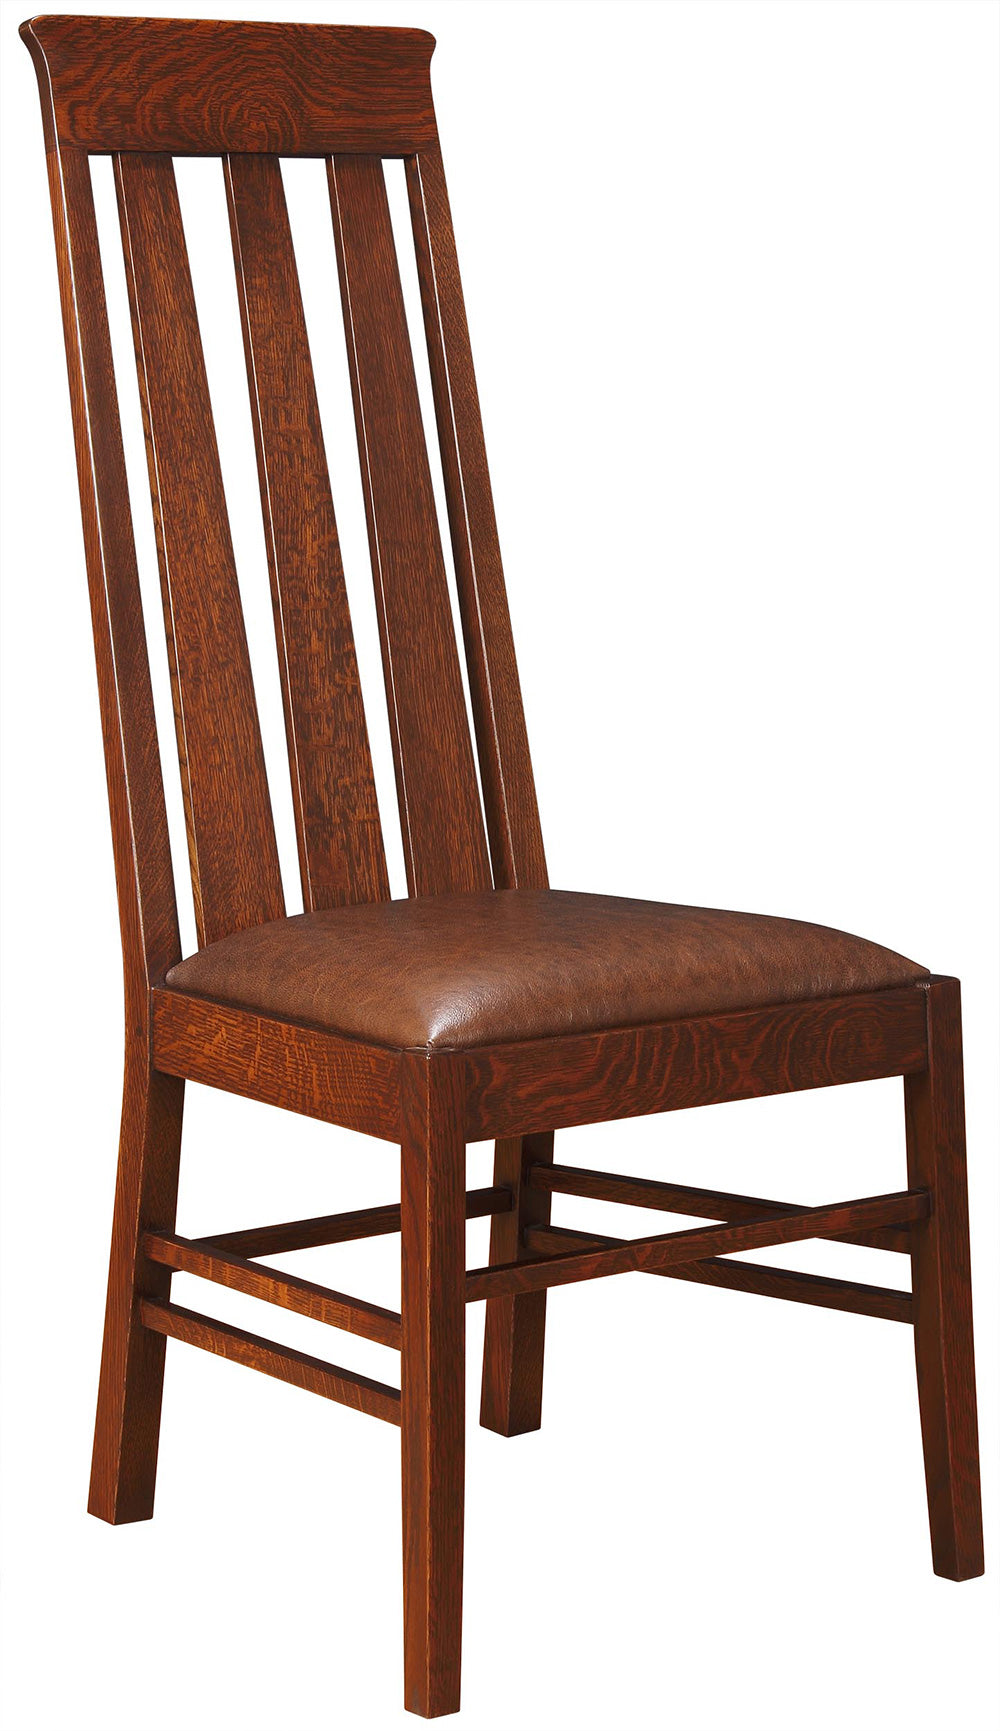 Highlands Side Chair - Stickley Brand